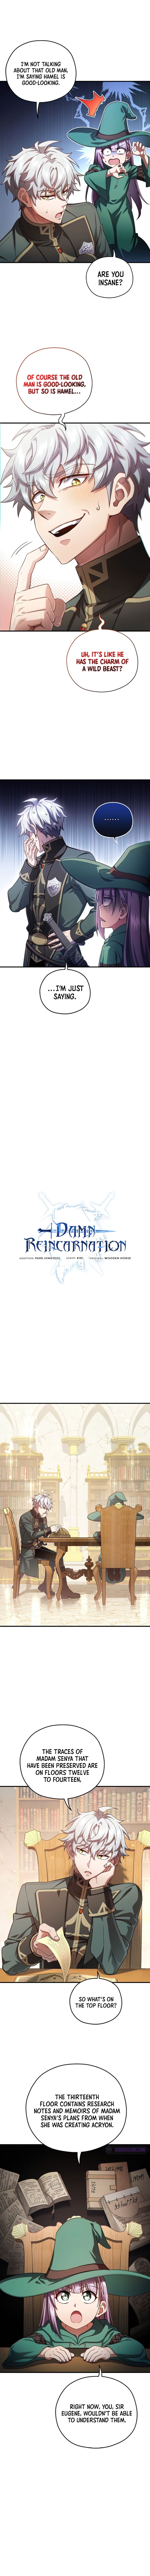 Damn Reincarnation Chapter 40 page 3